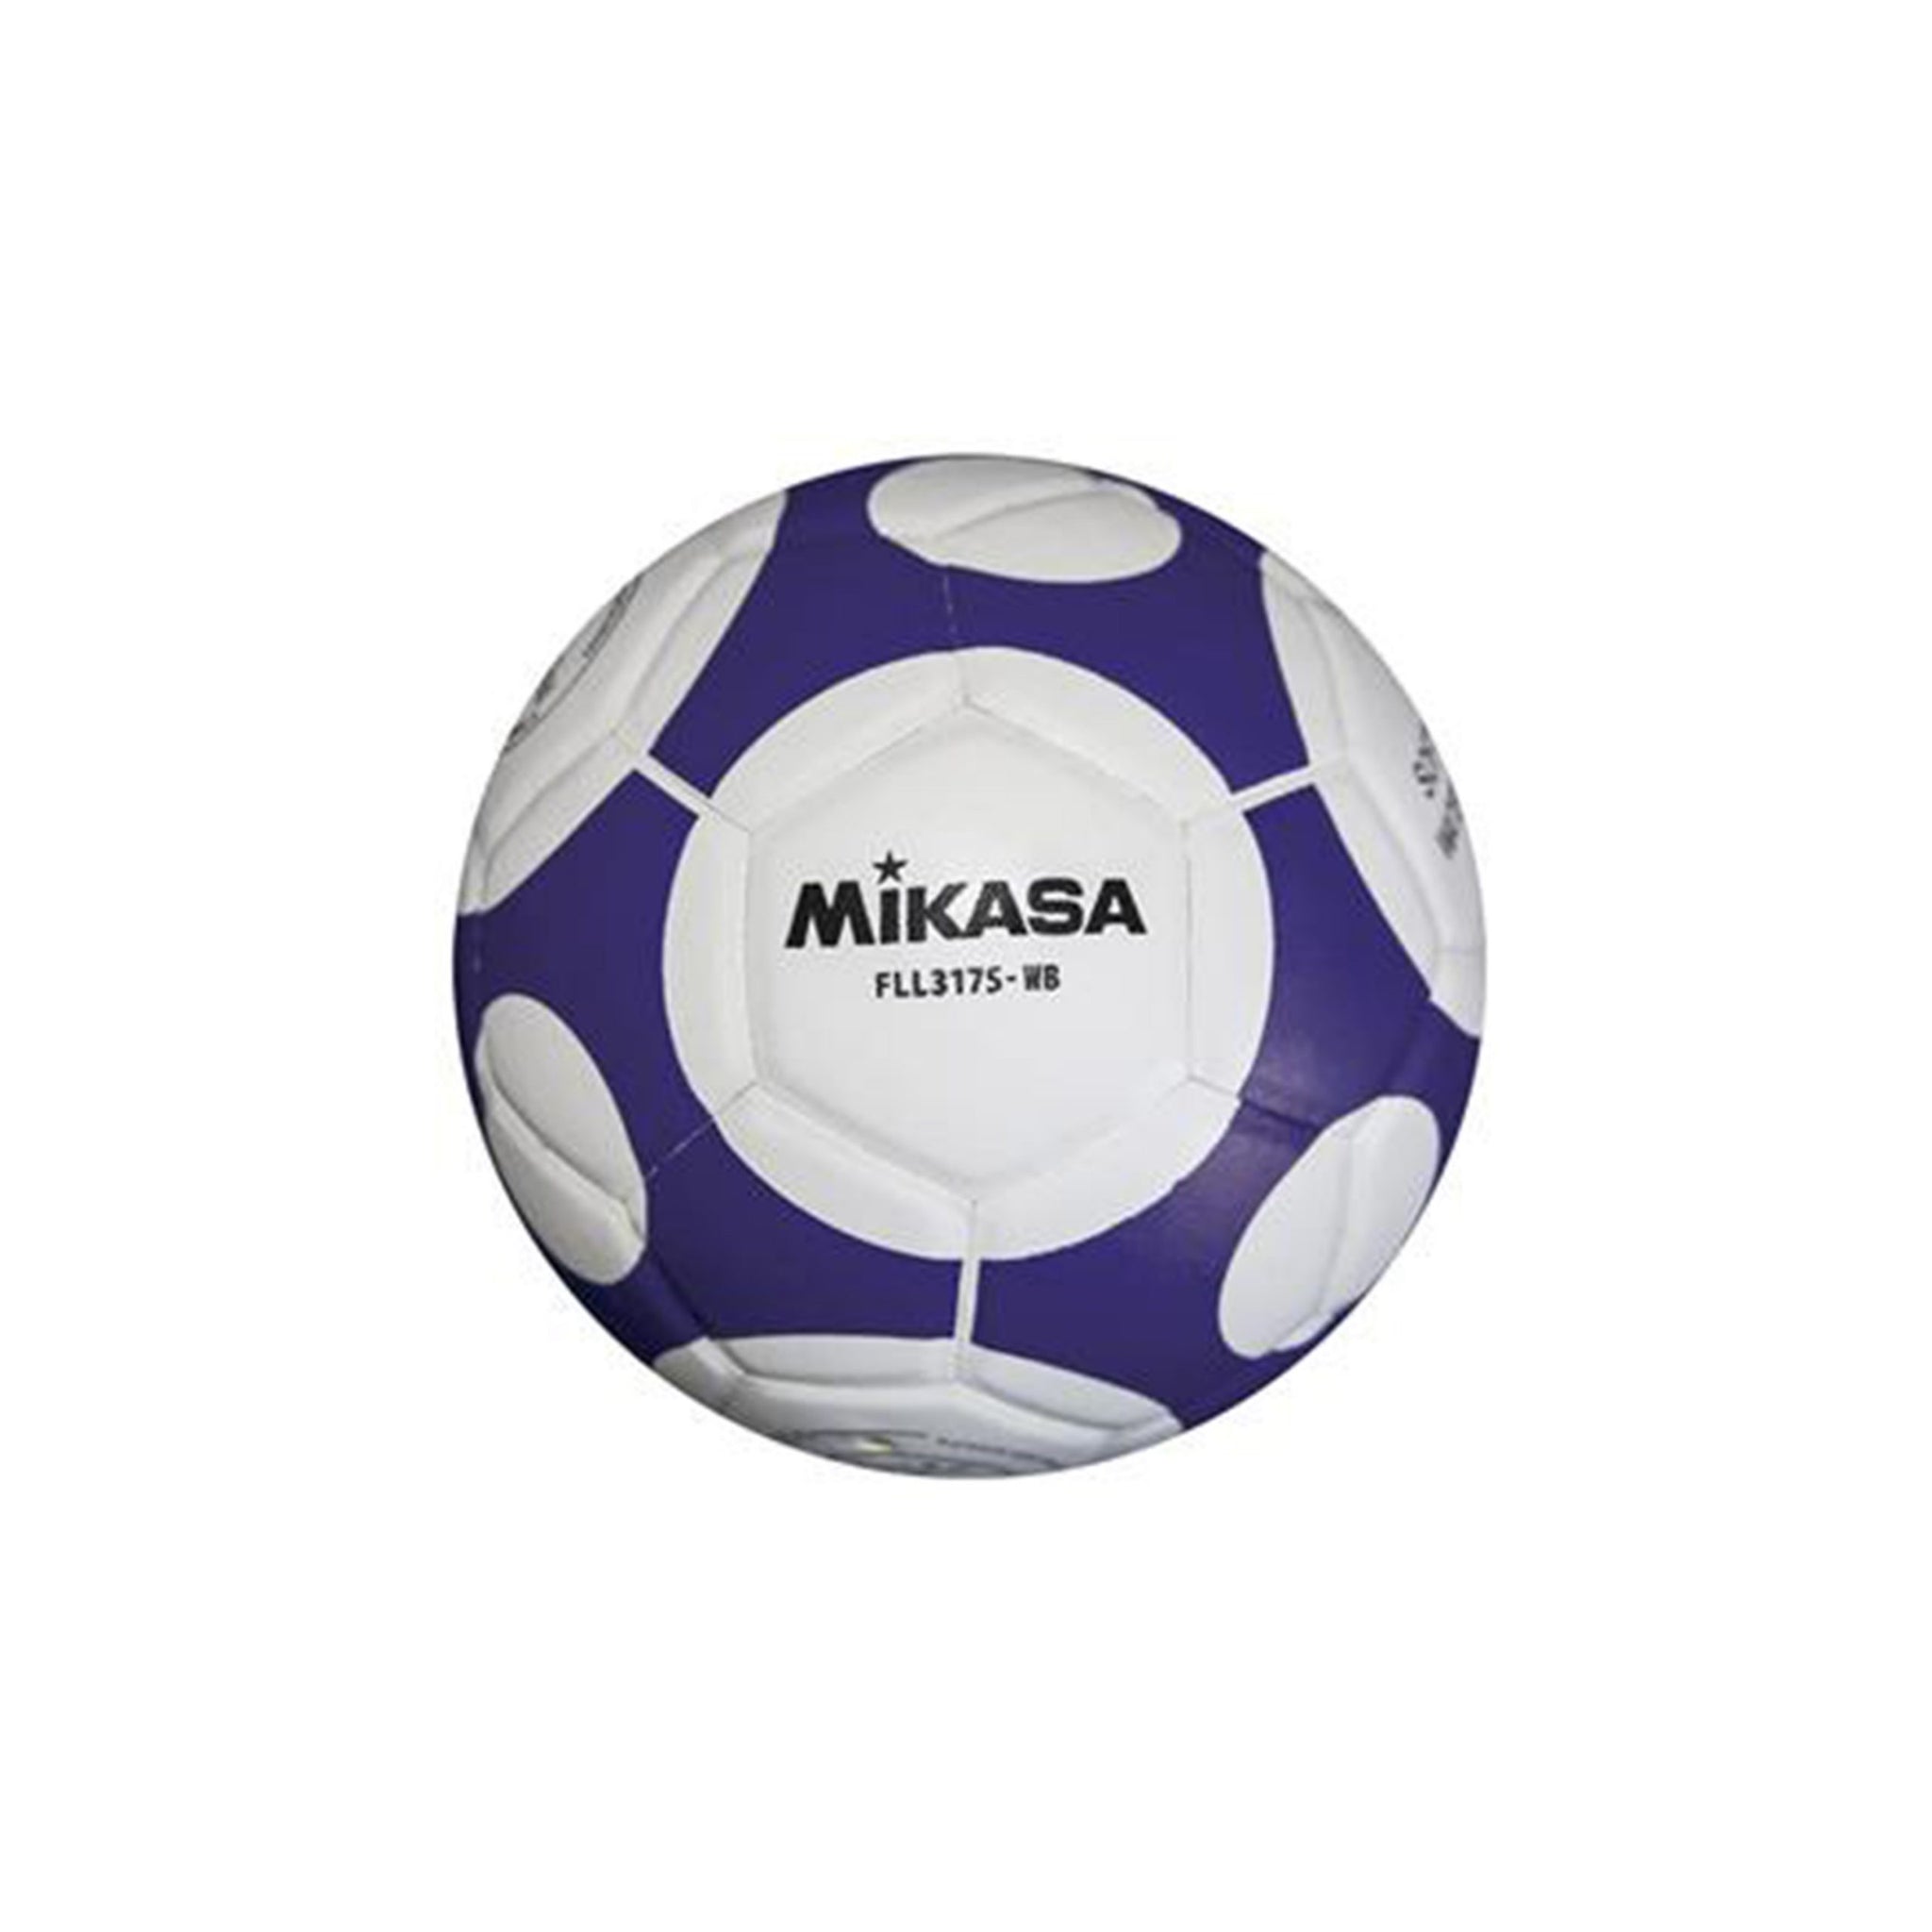 MIKASA Indoor Ball (Blue & White)